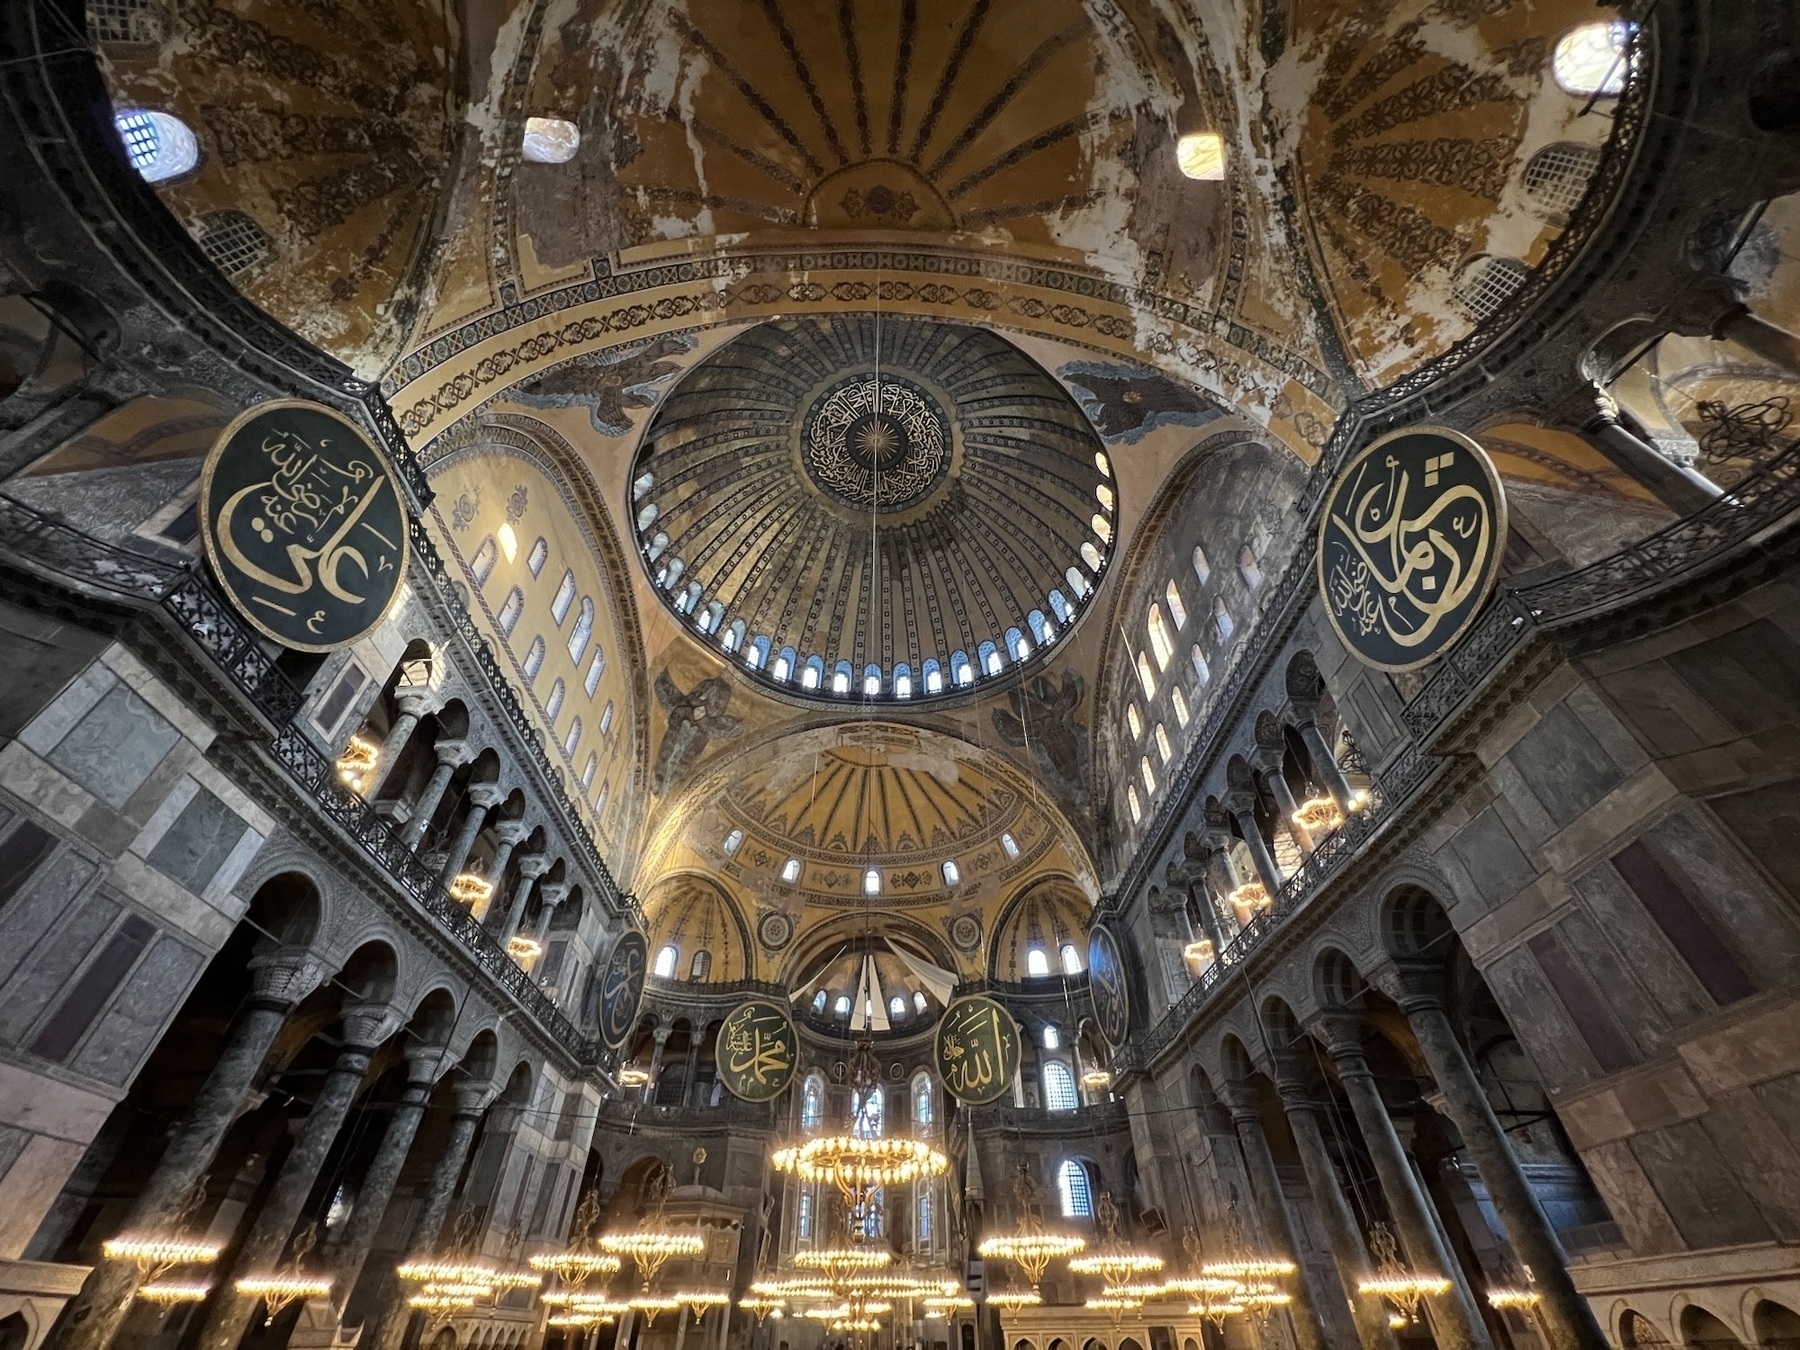 Wide angle of the interior of the Hagia Sophia